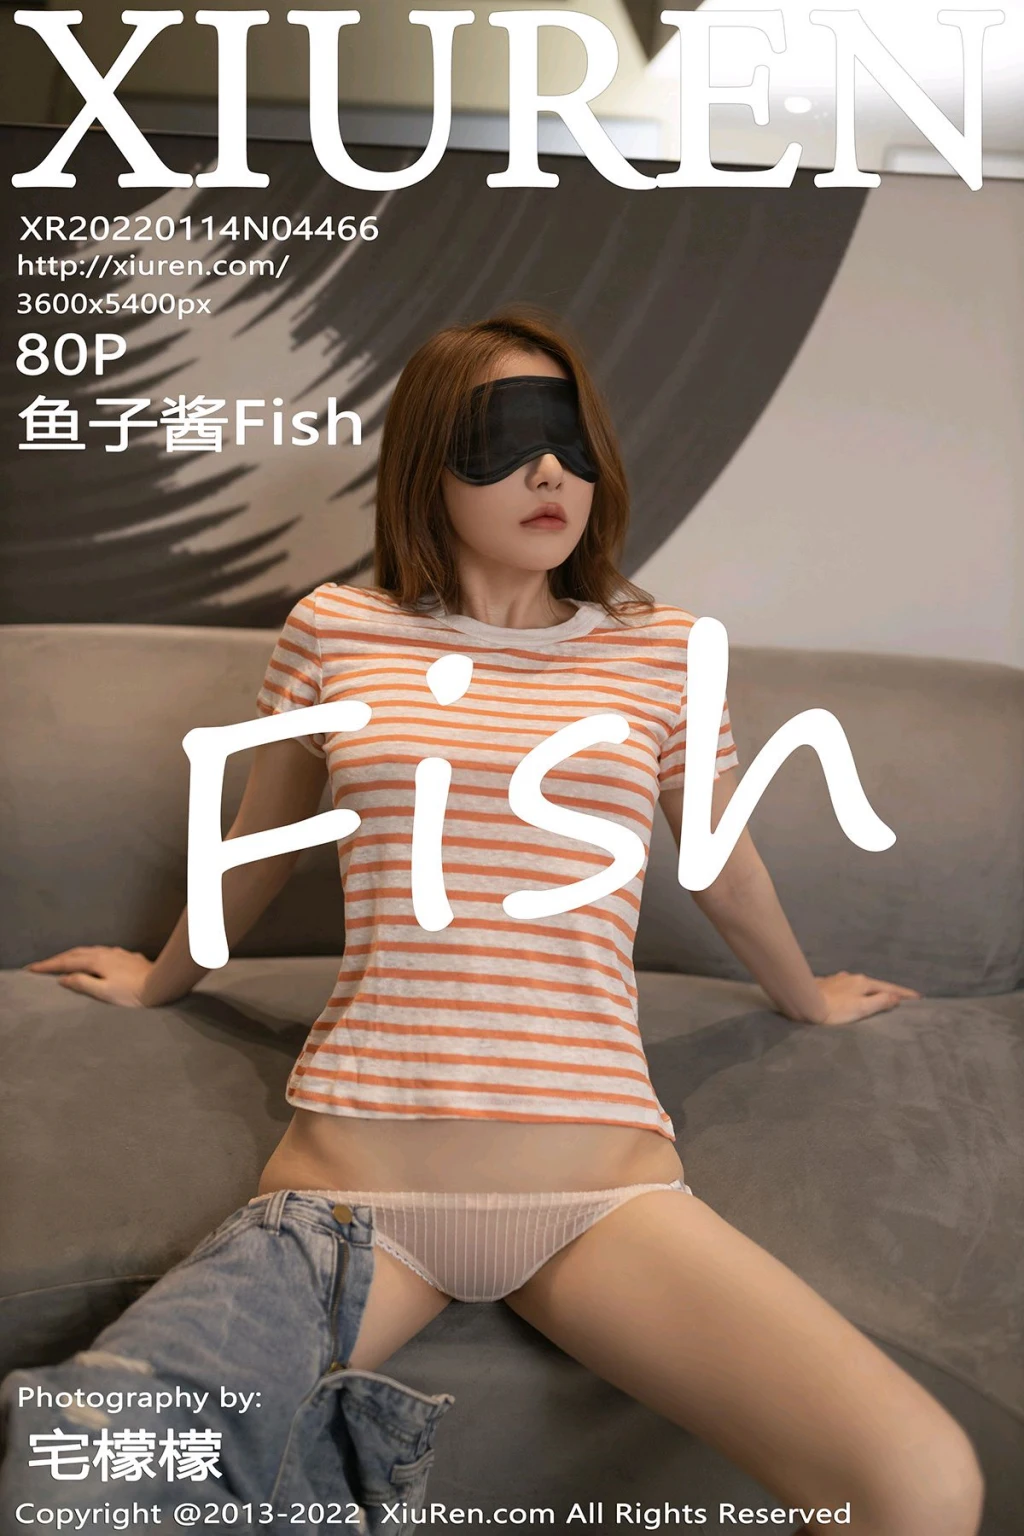 XIUREN No.4466: 鱼子酱Fish image No.80